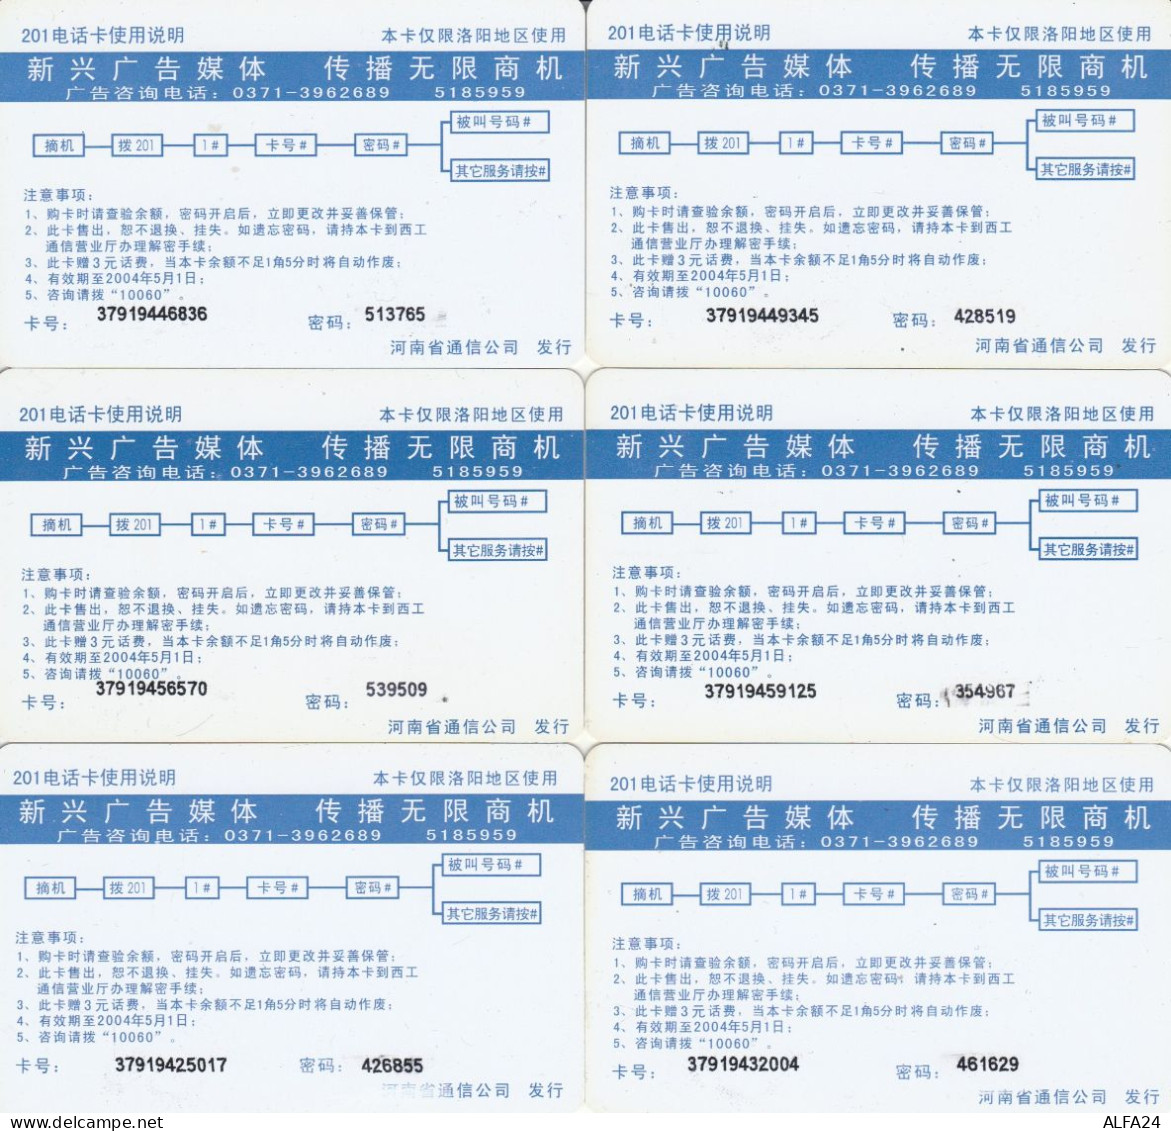 SERIES 12 PREPAID PHONE CARD CHINA (PY2512 - China